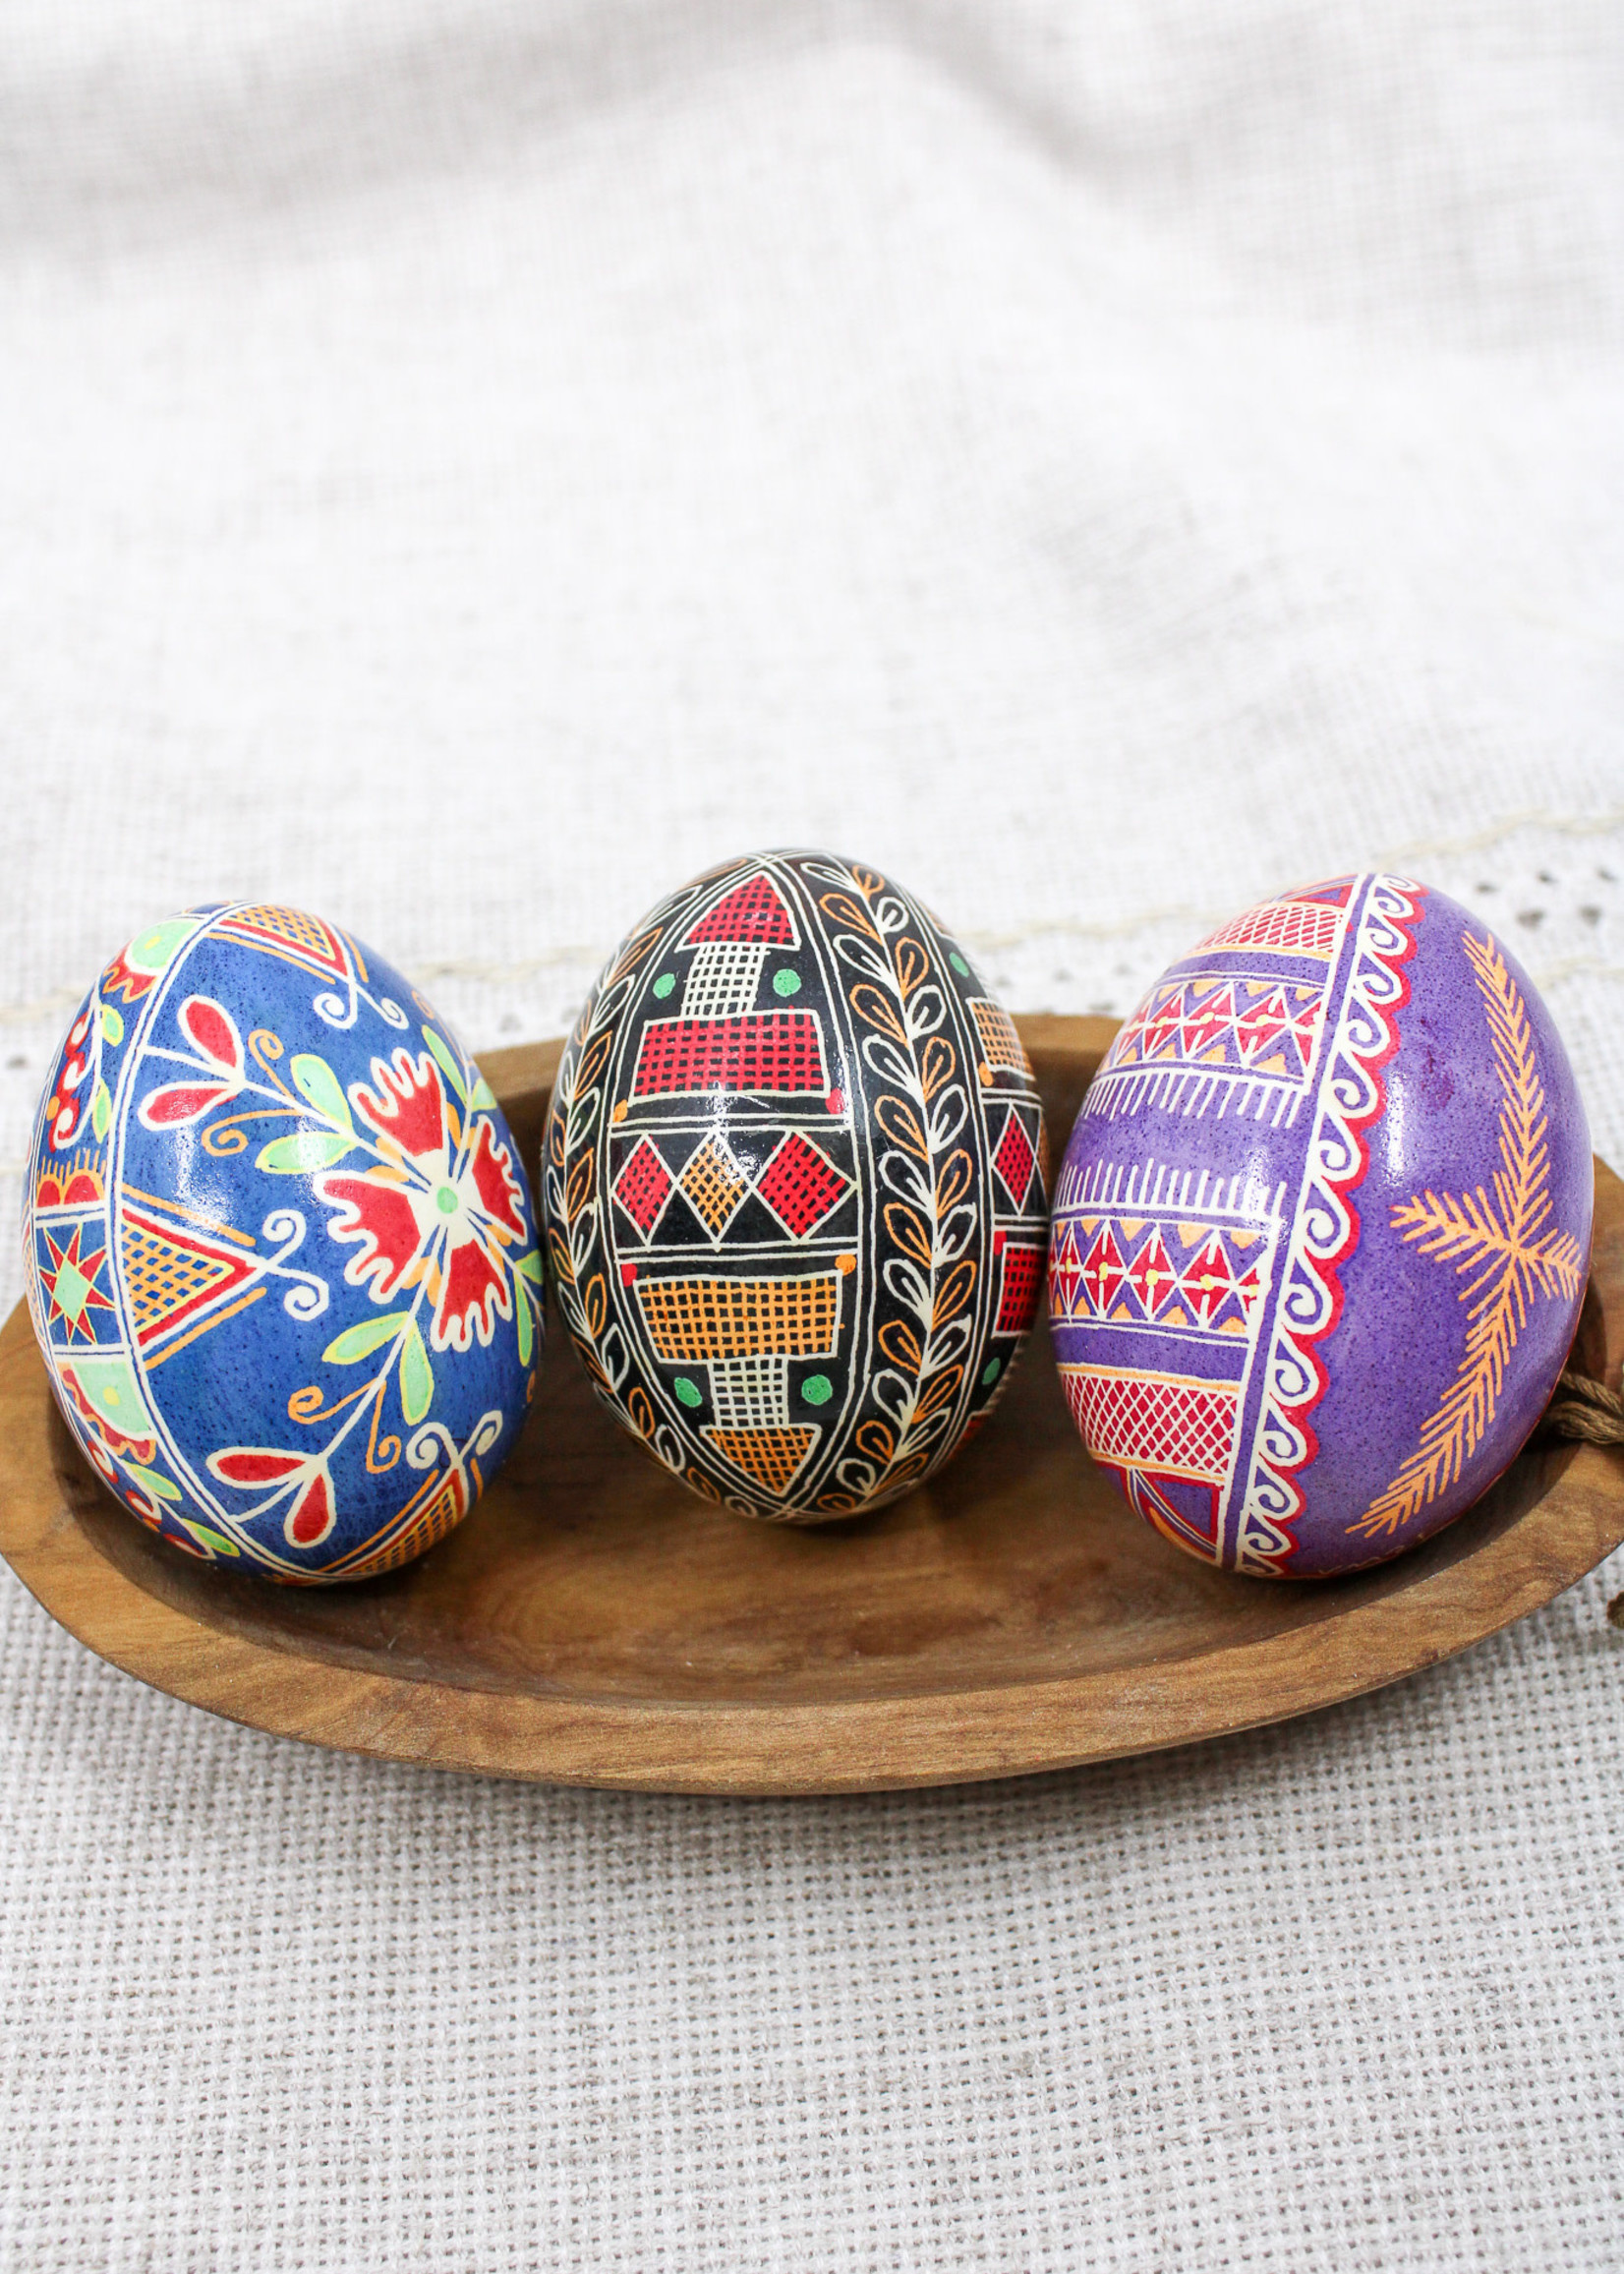 PYSANKA -  Handmade  Bukovina style decorated eggs